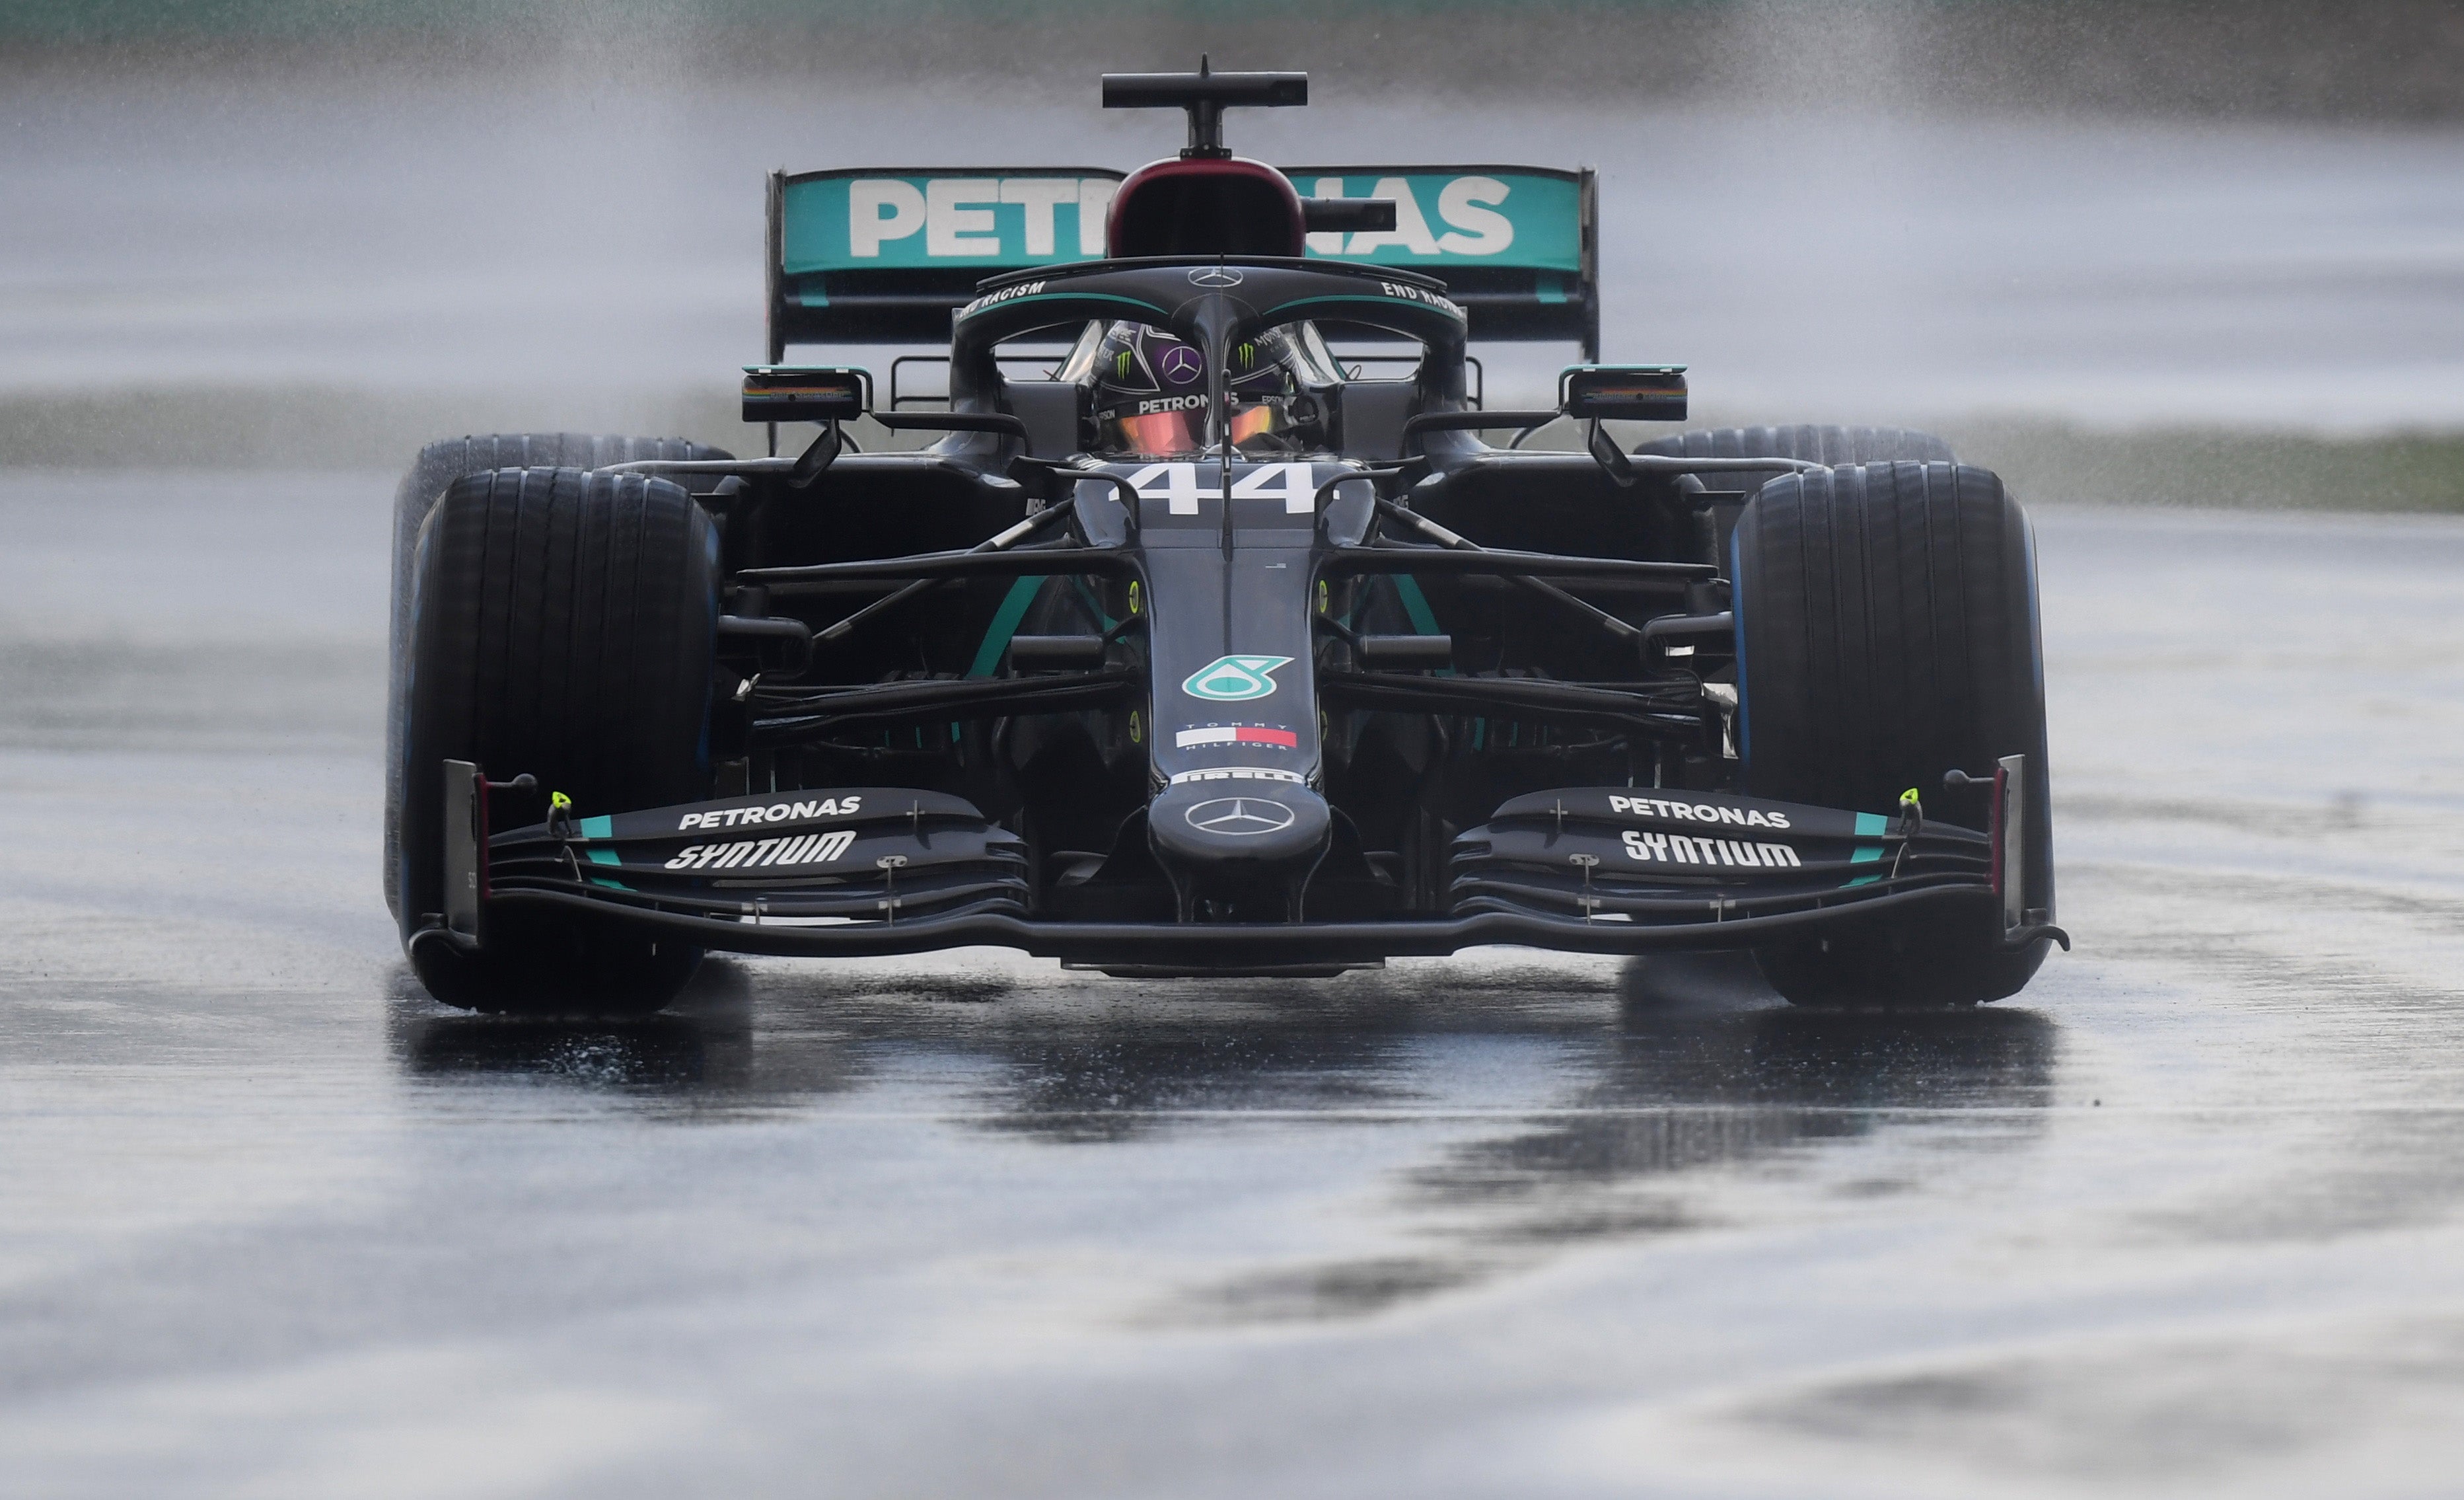 Lewis Hamilton struggled his way to sixth place